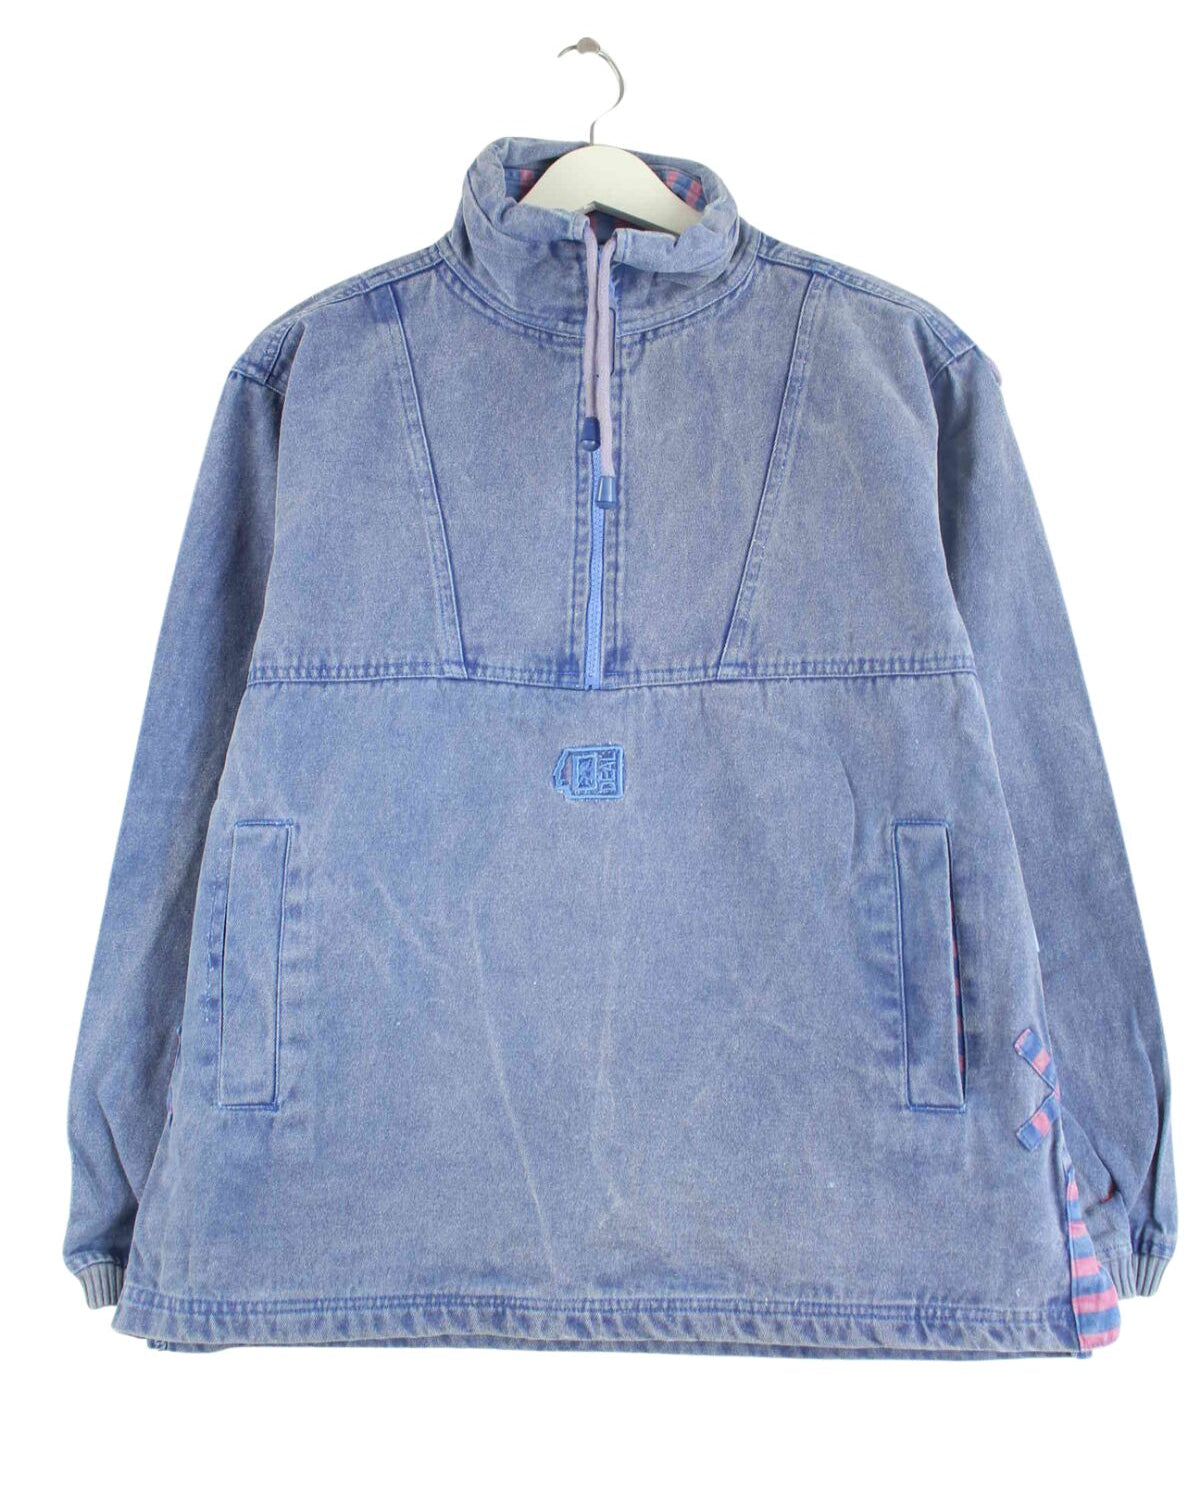 Vintage 90s Half Zip Jacke Blau M (front image)